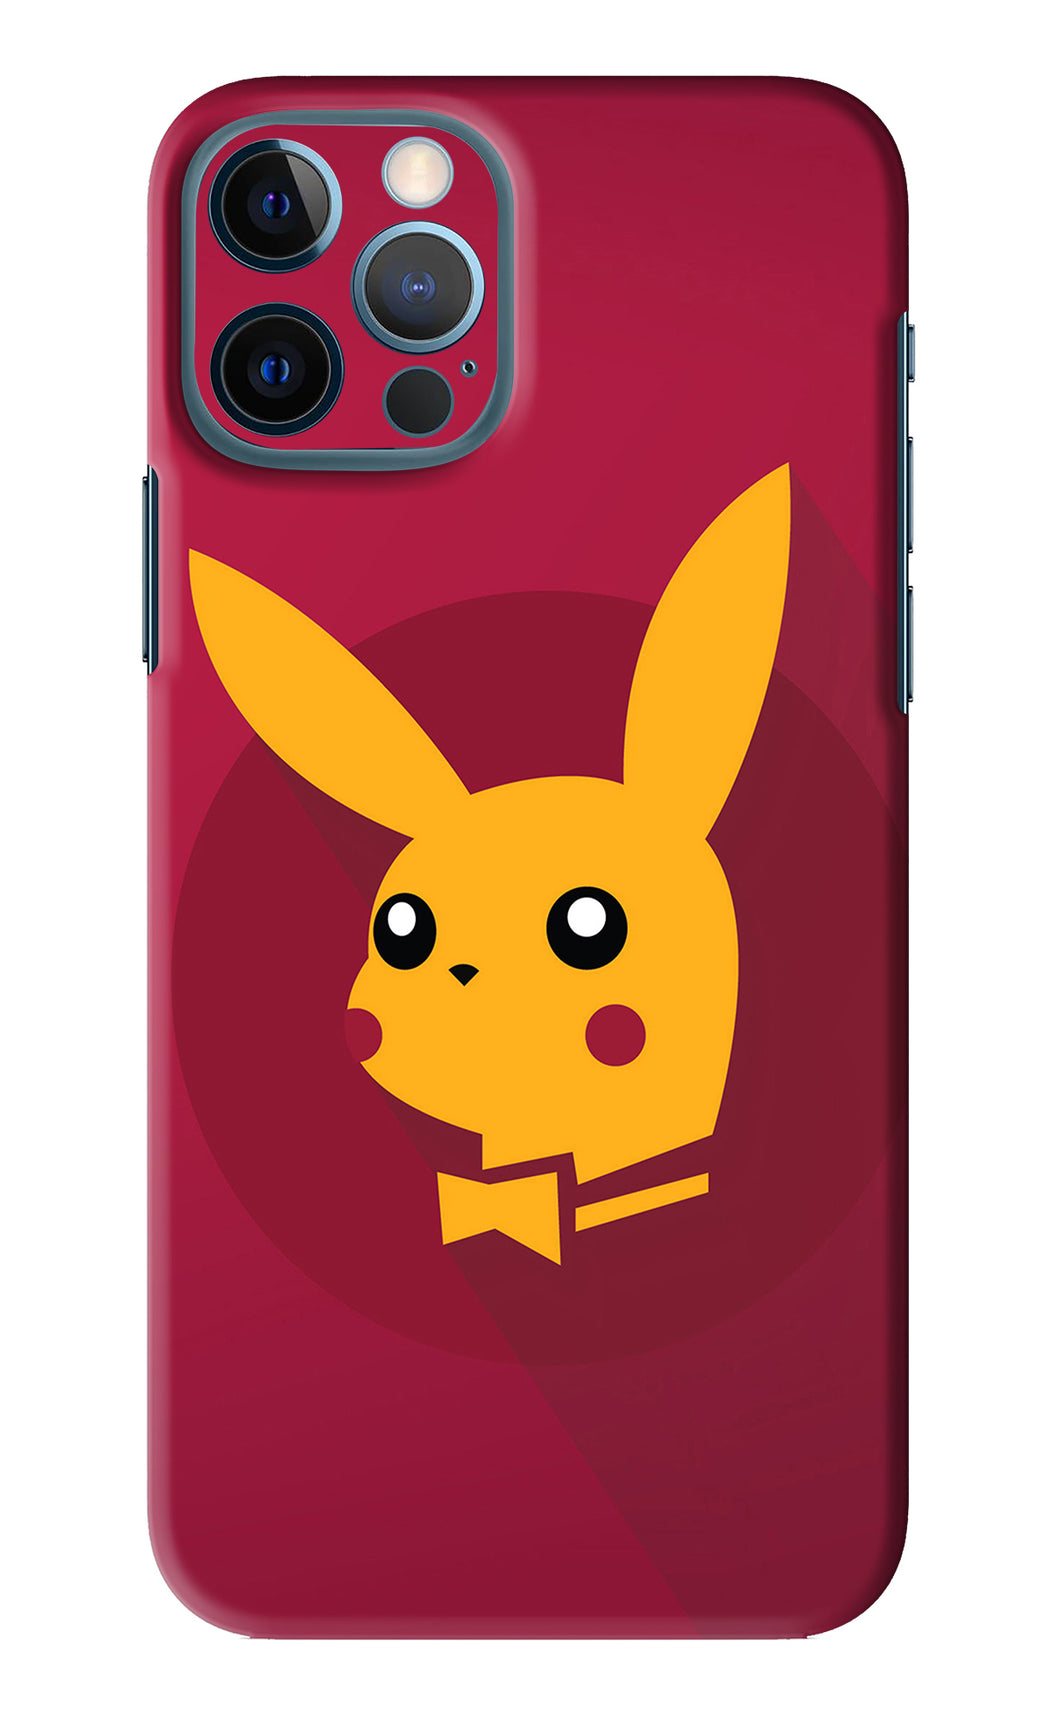 Pikachu iPhone 12 Pro Back Skin Wrap